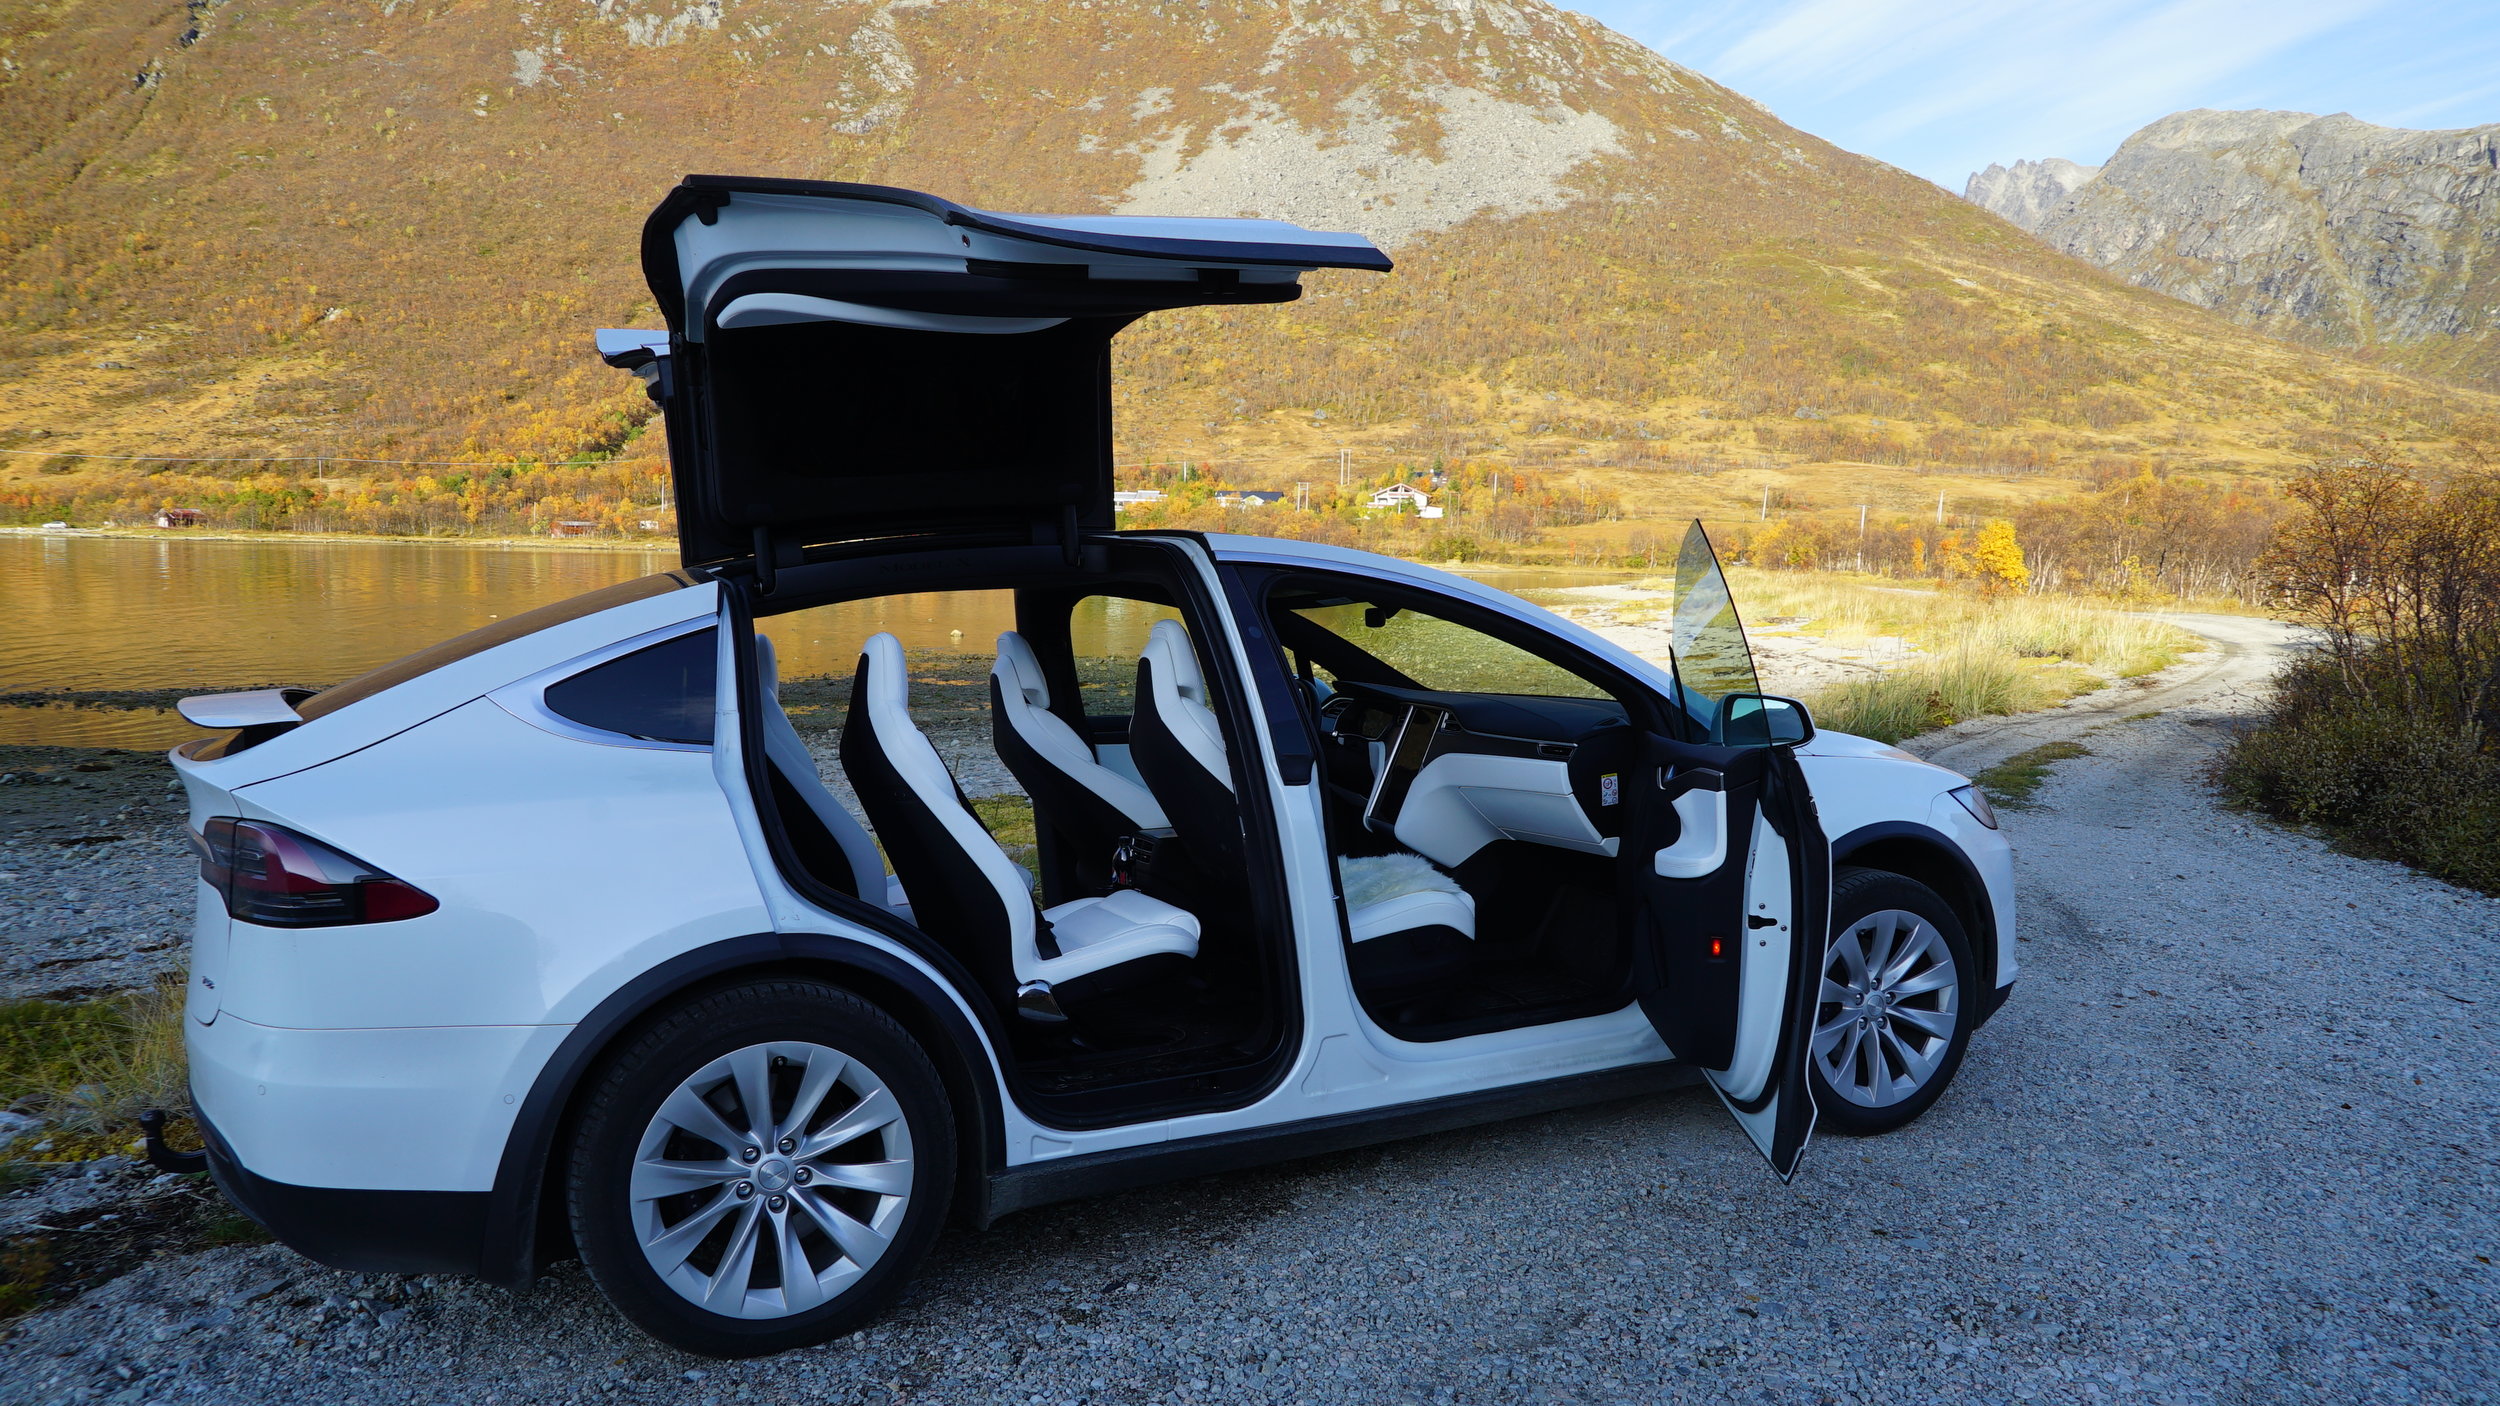 Our Brand New Luxury Car - Tesla Model X.